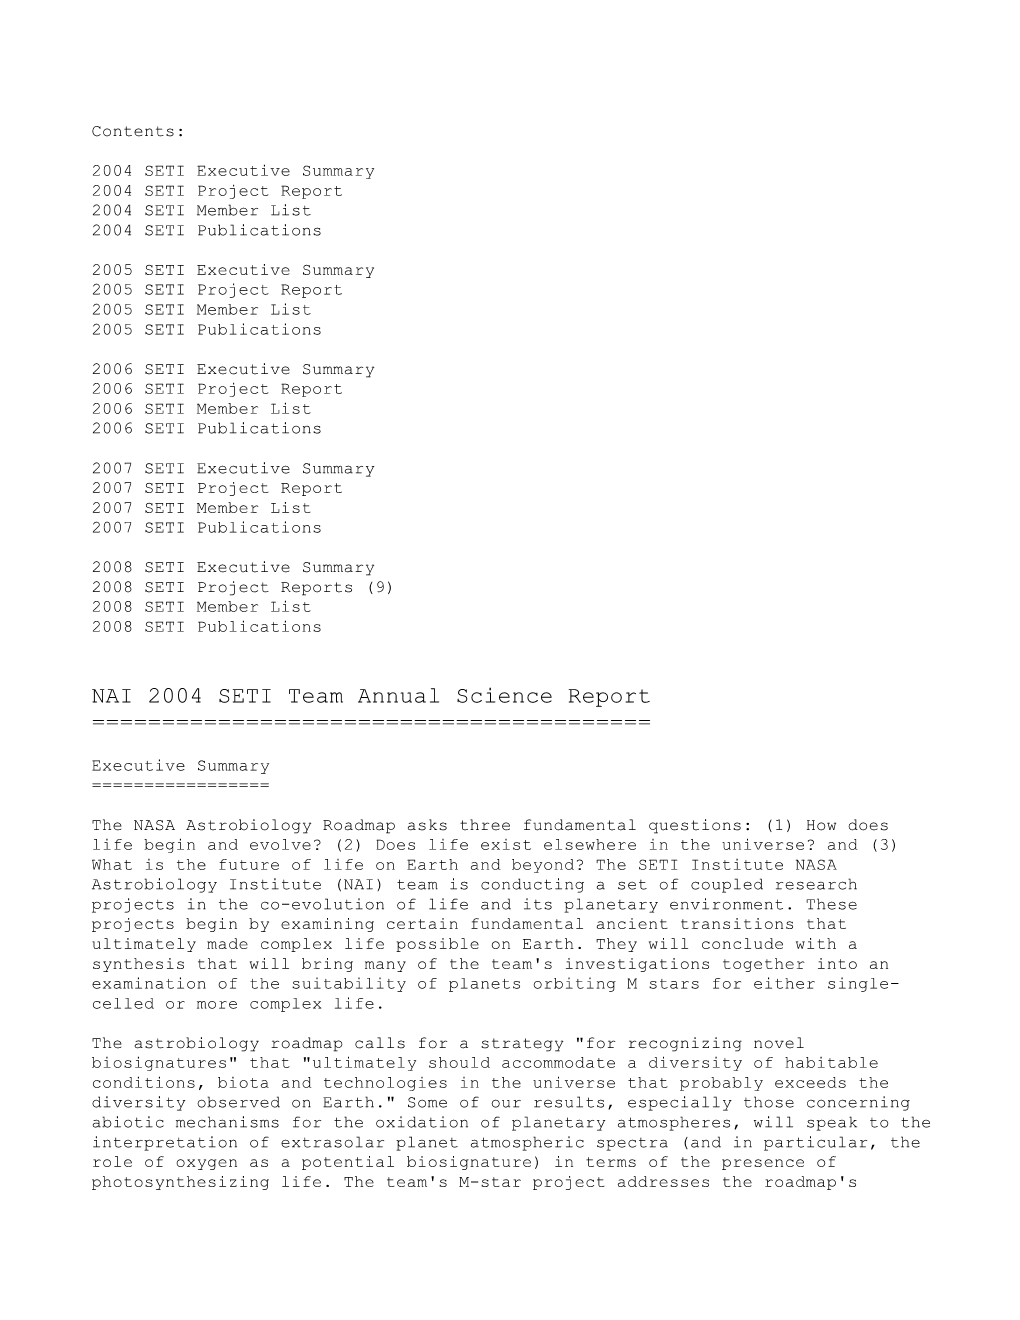 NAI 2004 SETI Team Annual Science Report ======